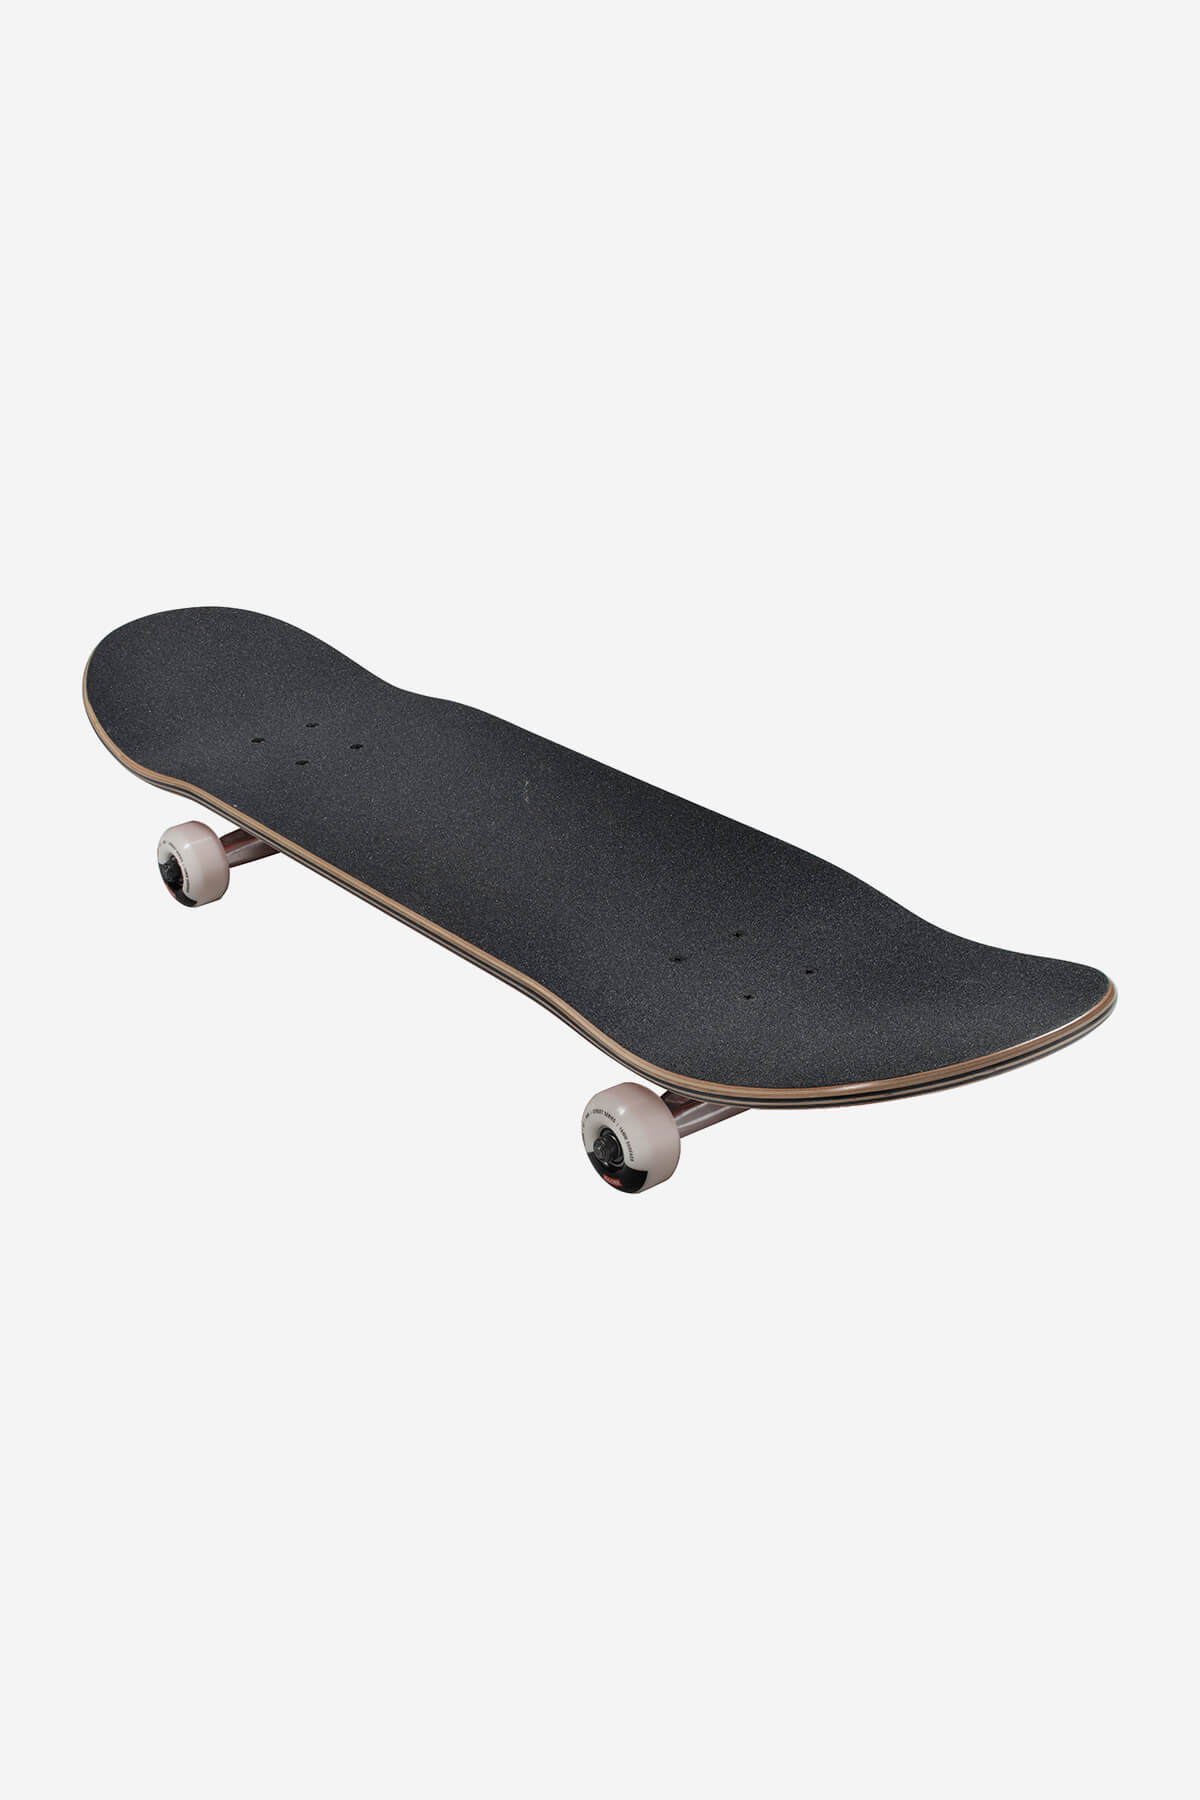 g1 lineform cinnamon 8.25" complete skateboard